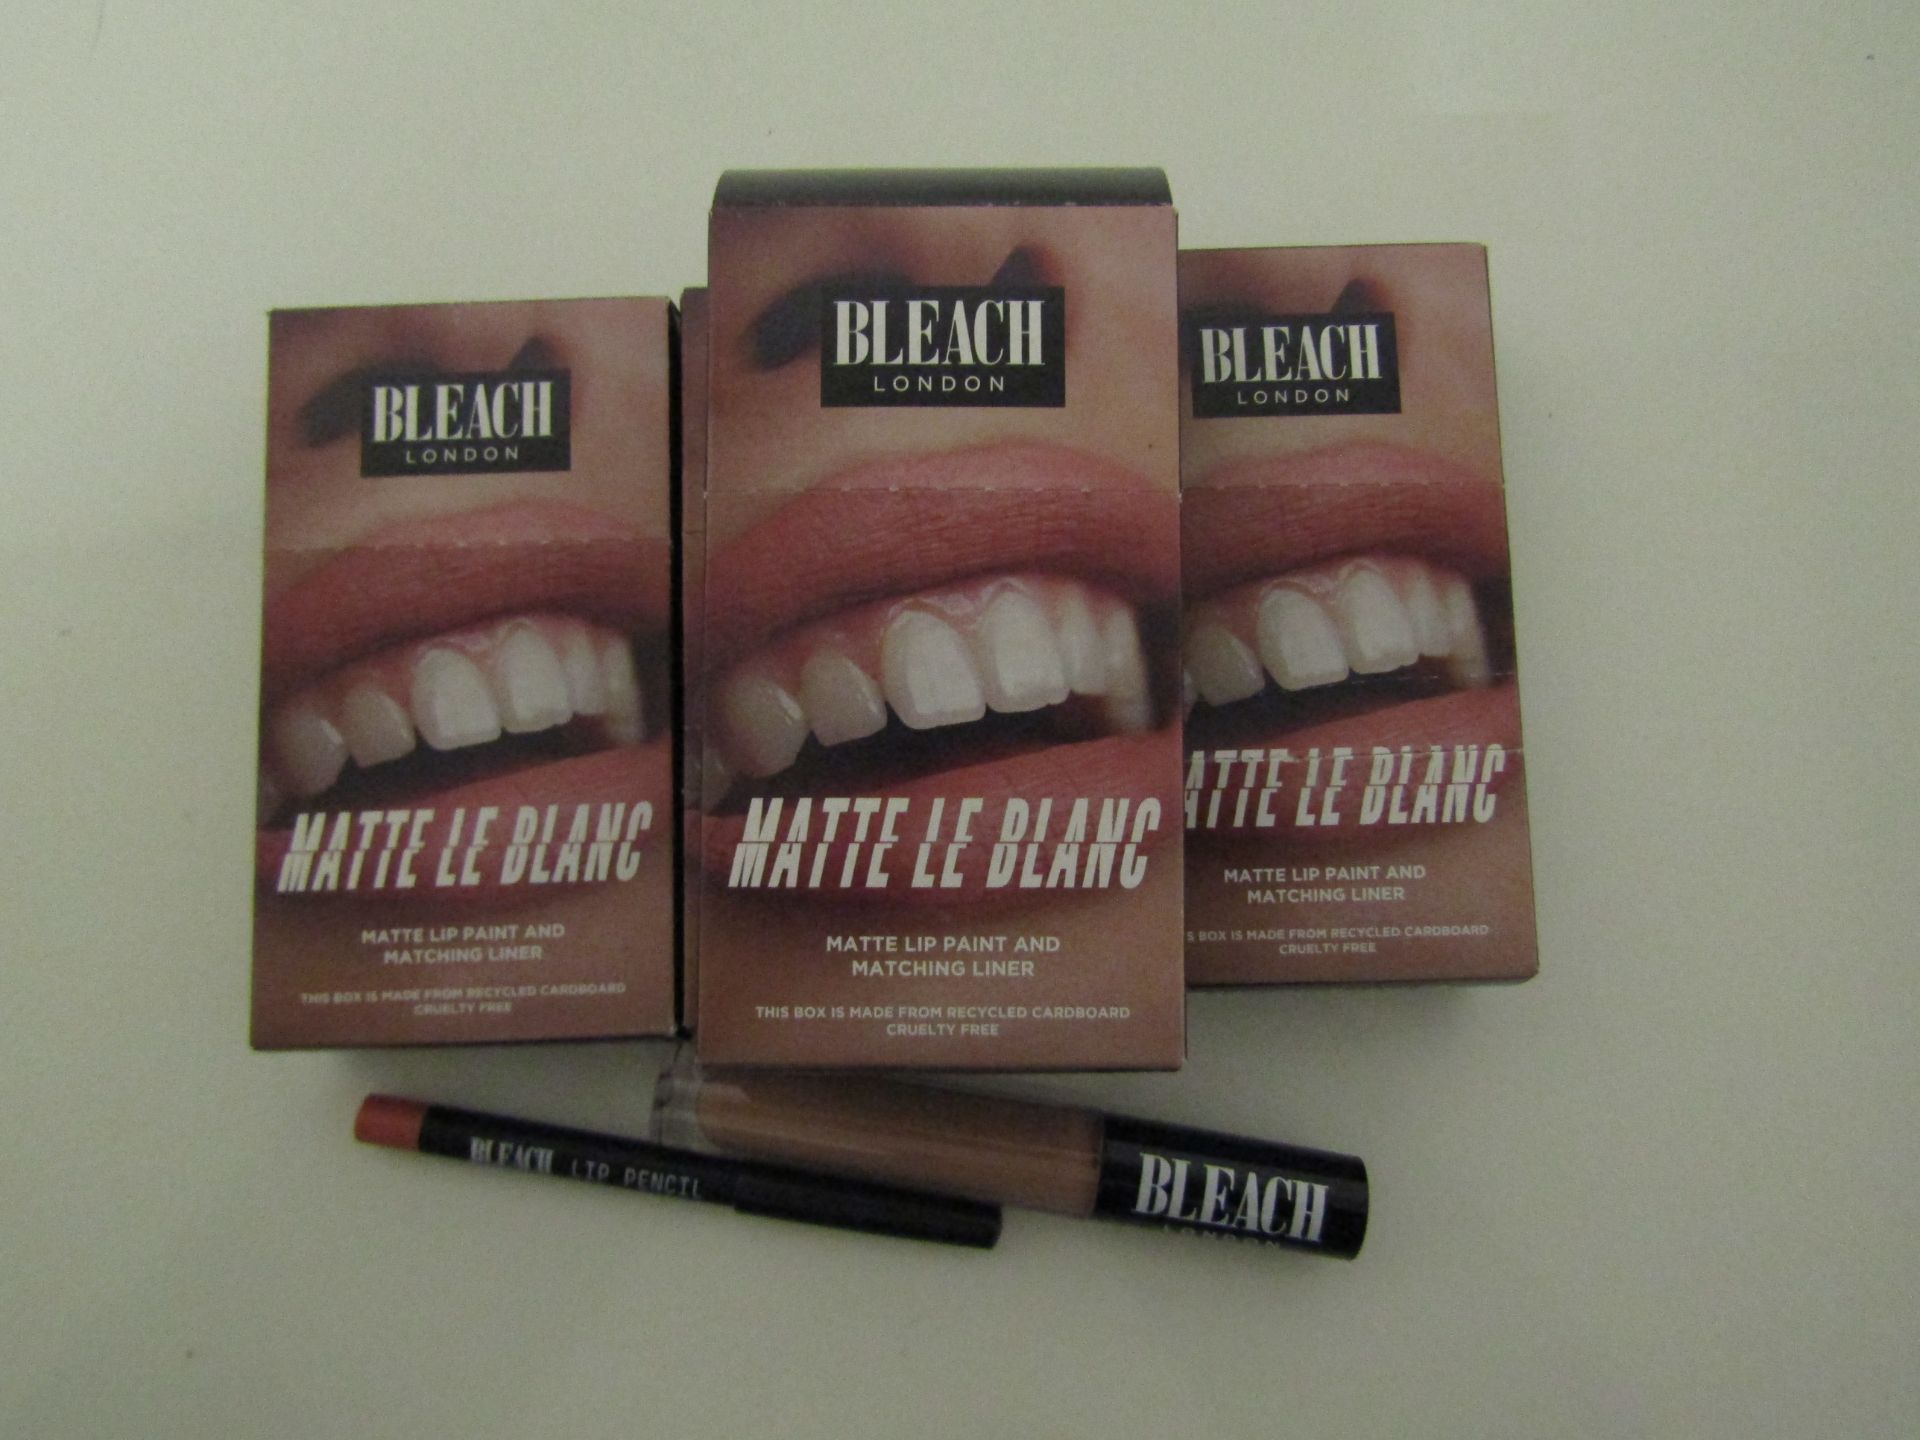 4 x Bleach London - Matte Lip Paint & Matching Liner - New & Boxed